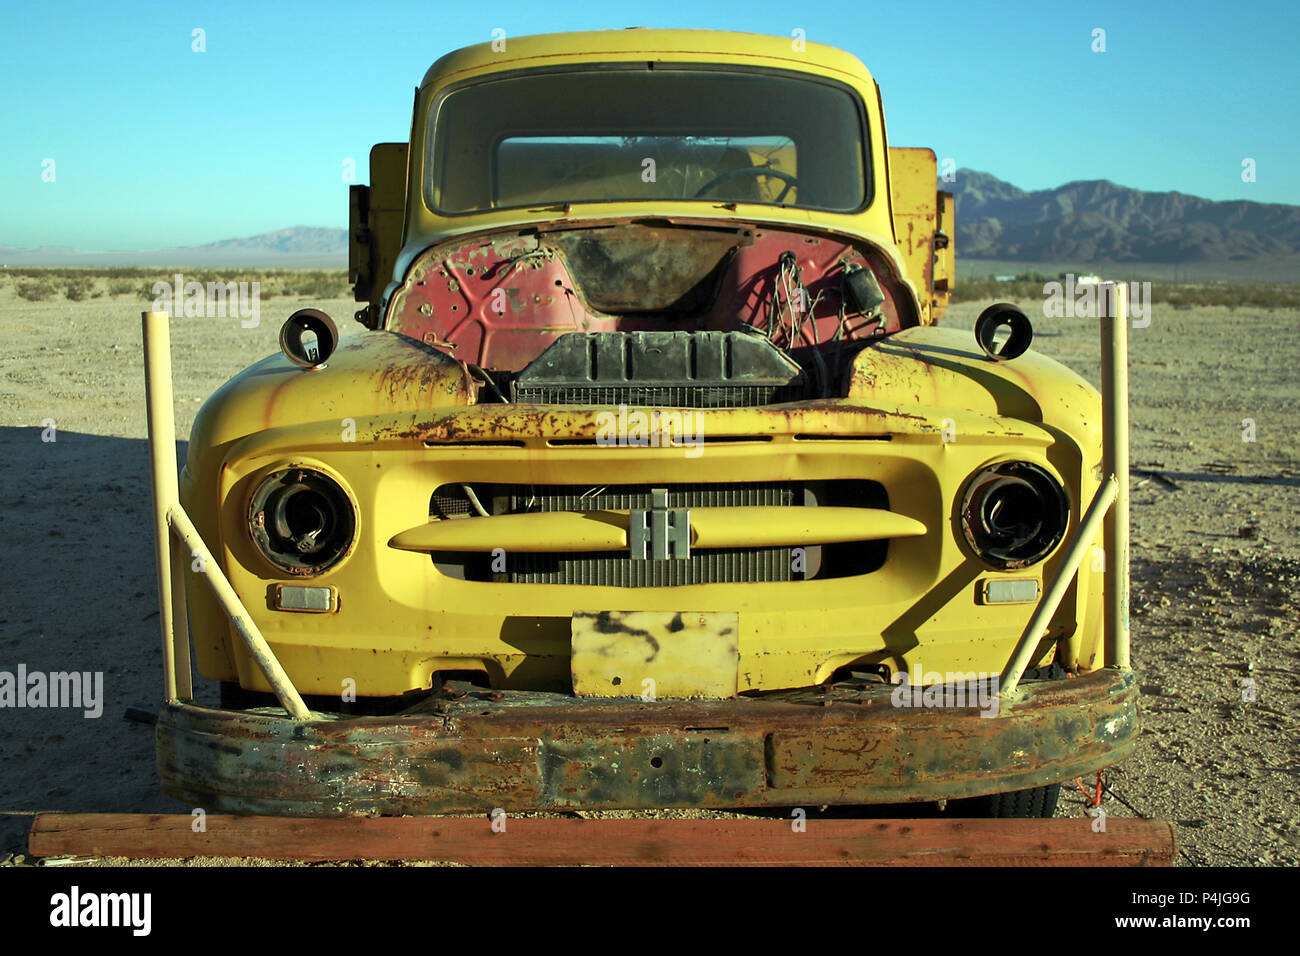 Old, abandoned, cannibalised, yellow 1954 International Harvester R-110 series pick up truck. Wonder Valley, near Joshua Tree, Mojave, California, USA Stock Photo